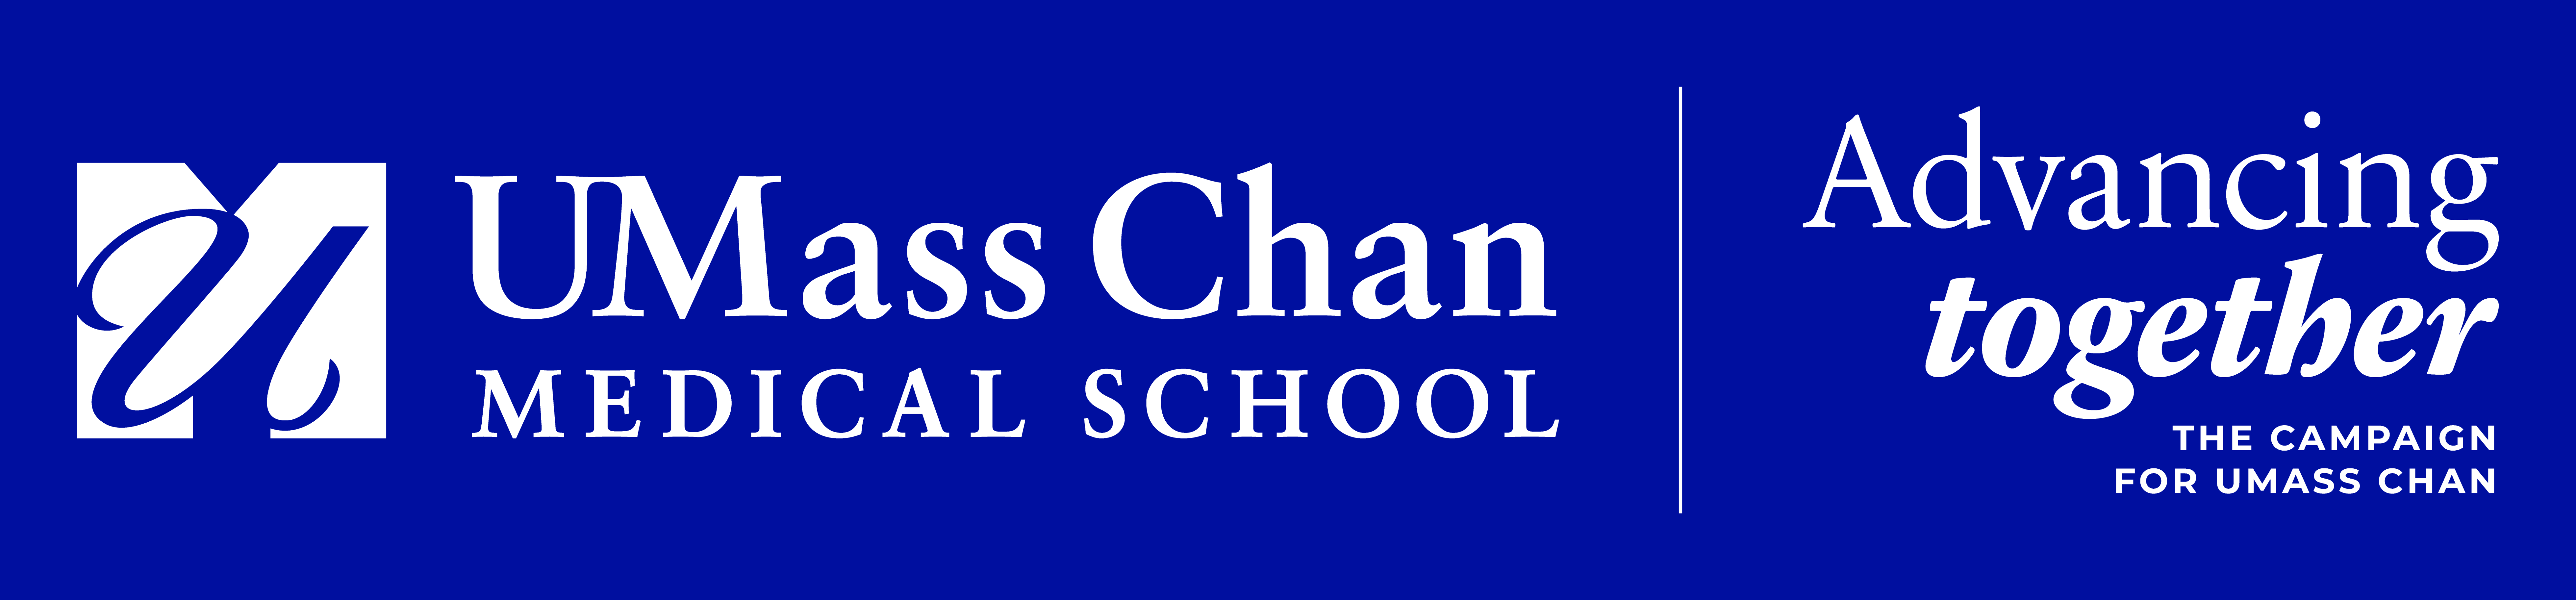 UMass Chan Medical School - Advancing Together logo